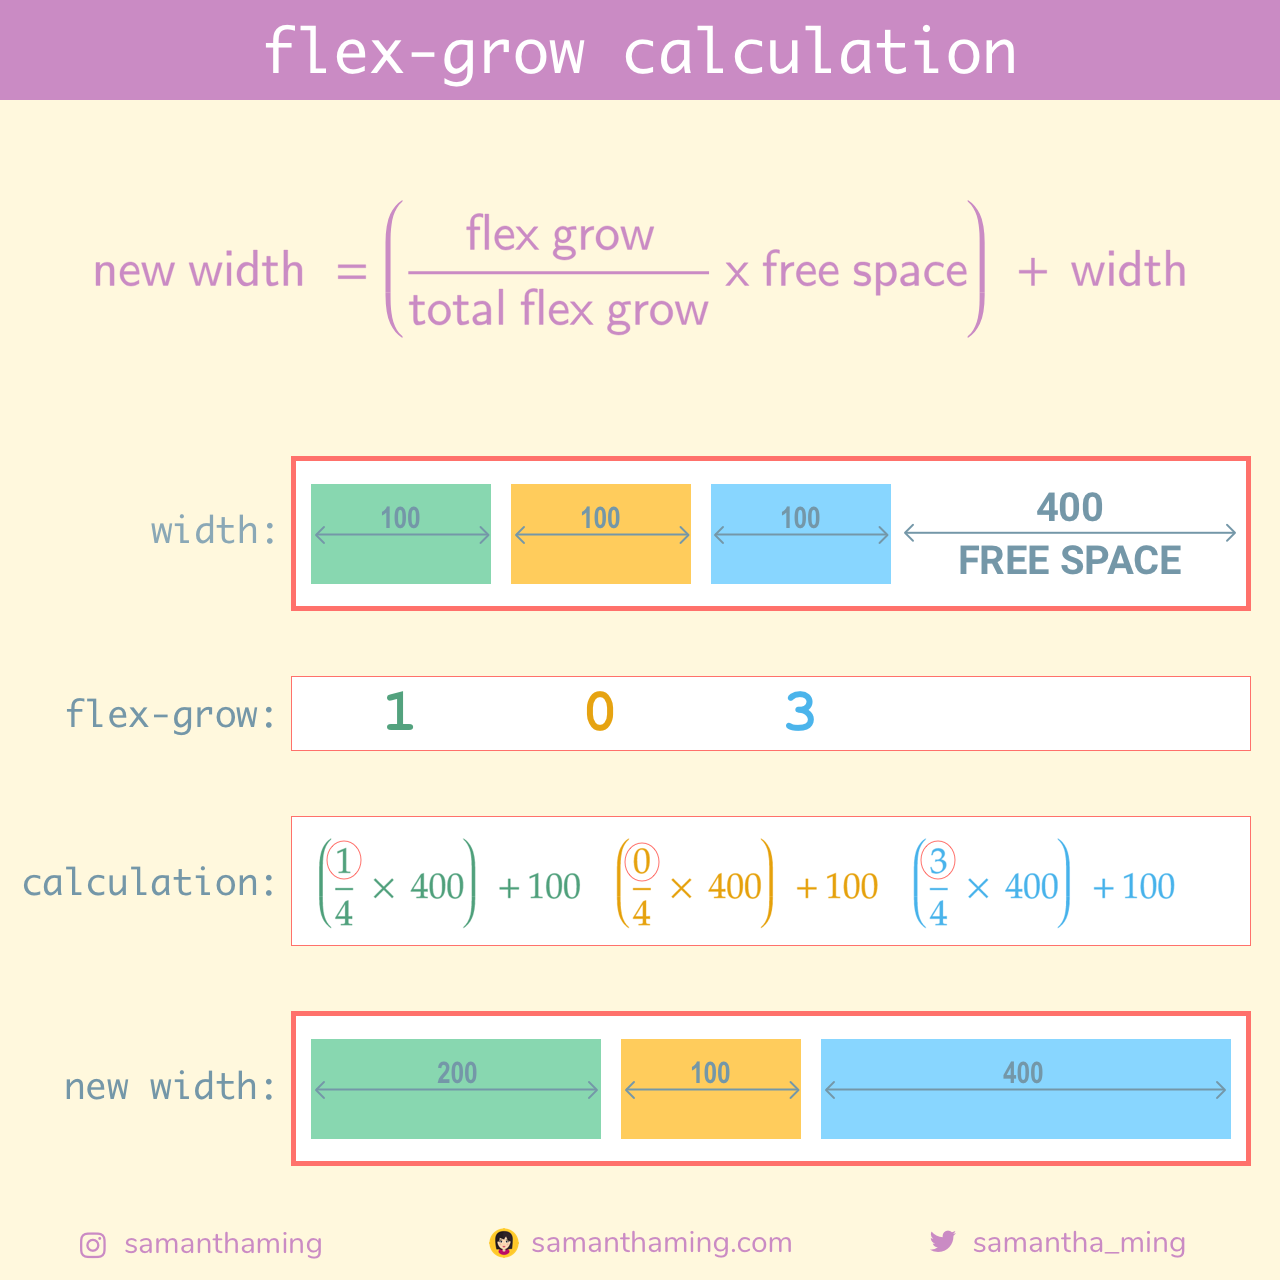 flex-grow calculation